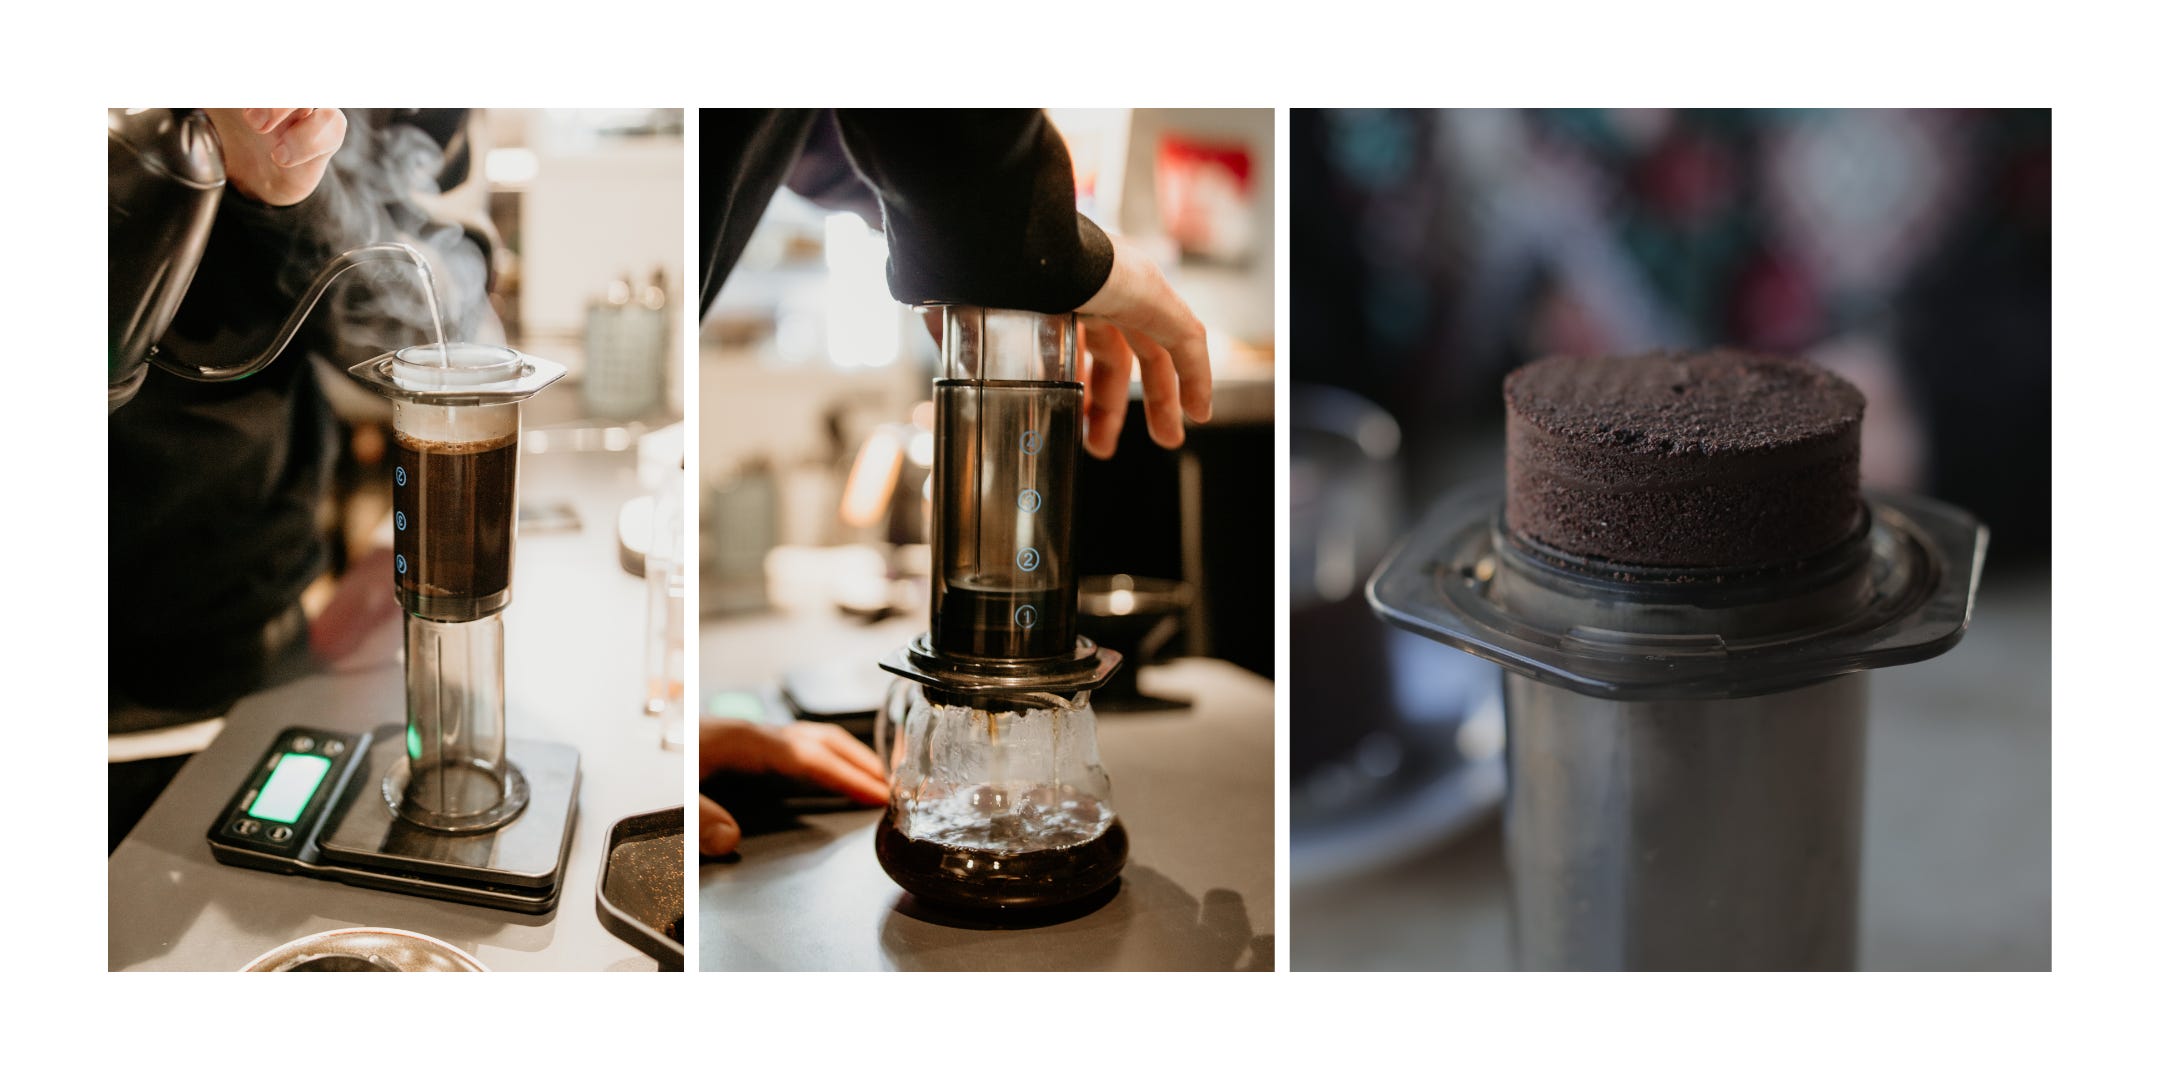 Why We Love the AeroPress Coffee Maker